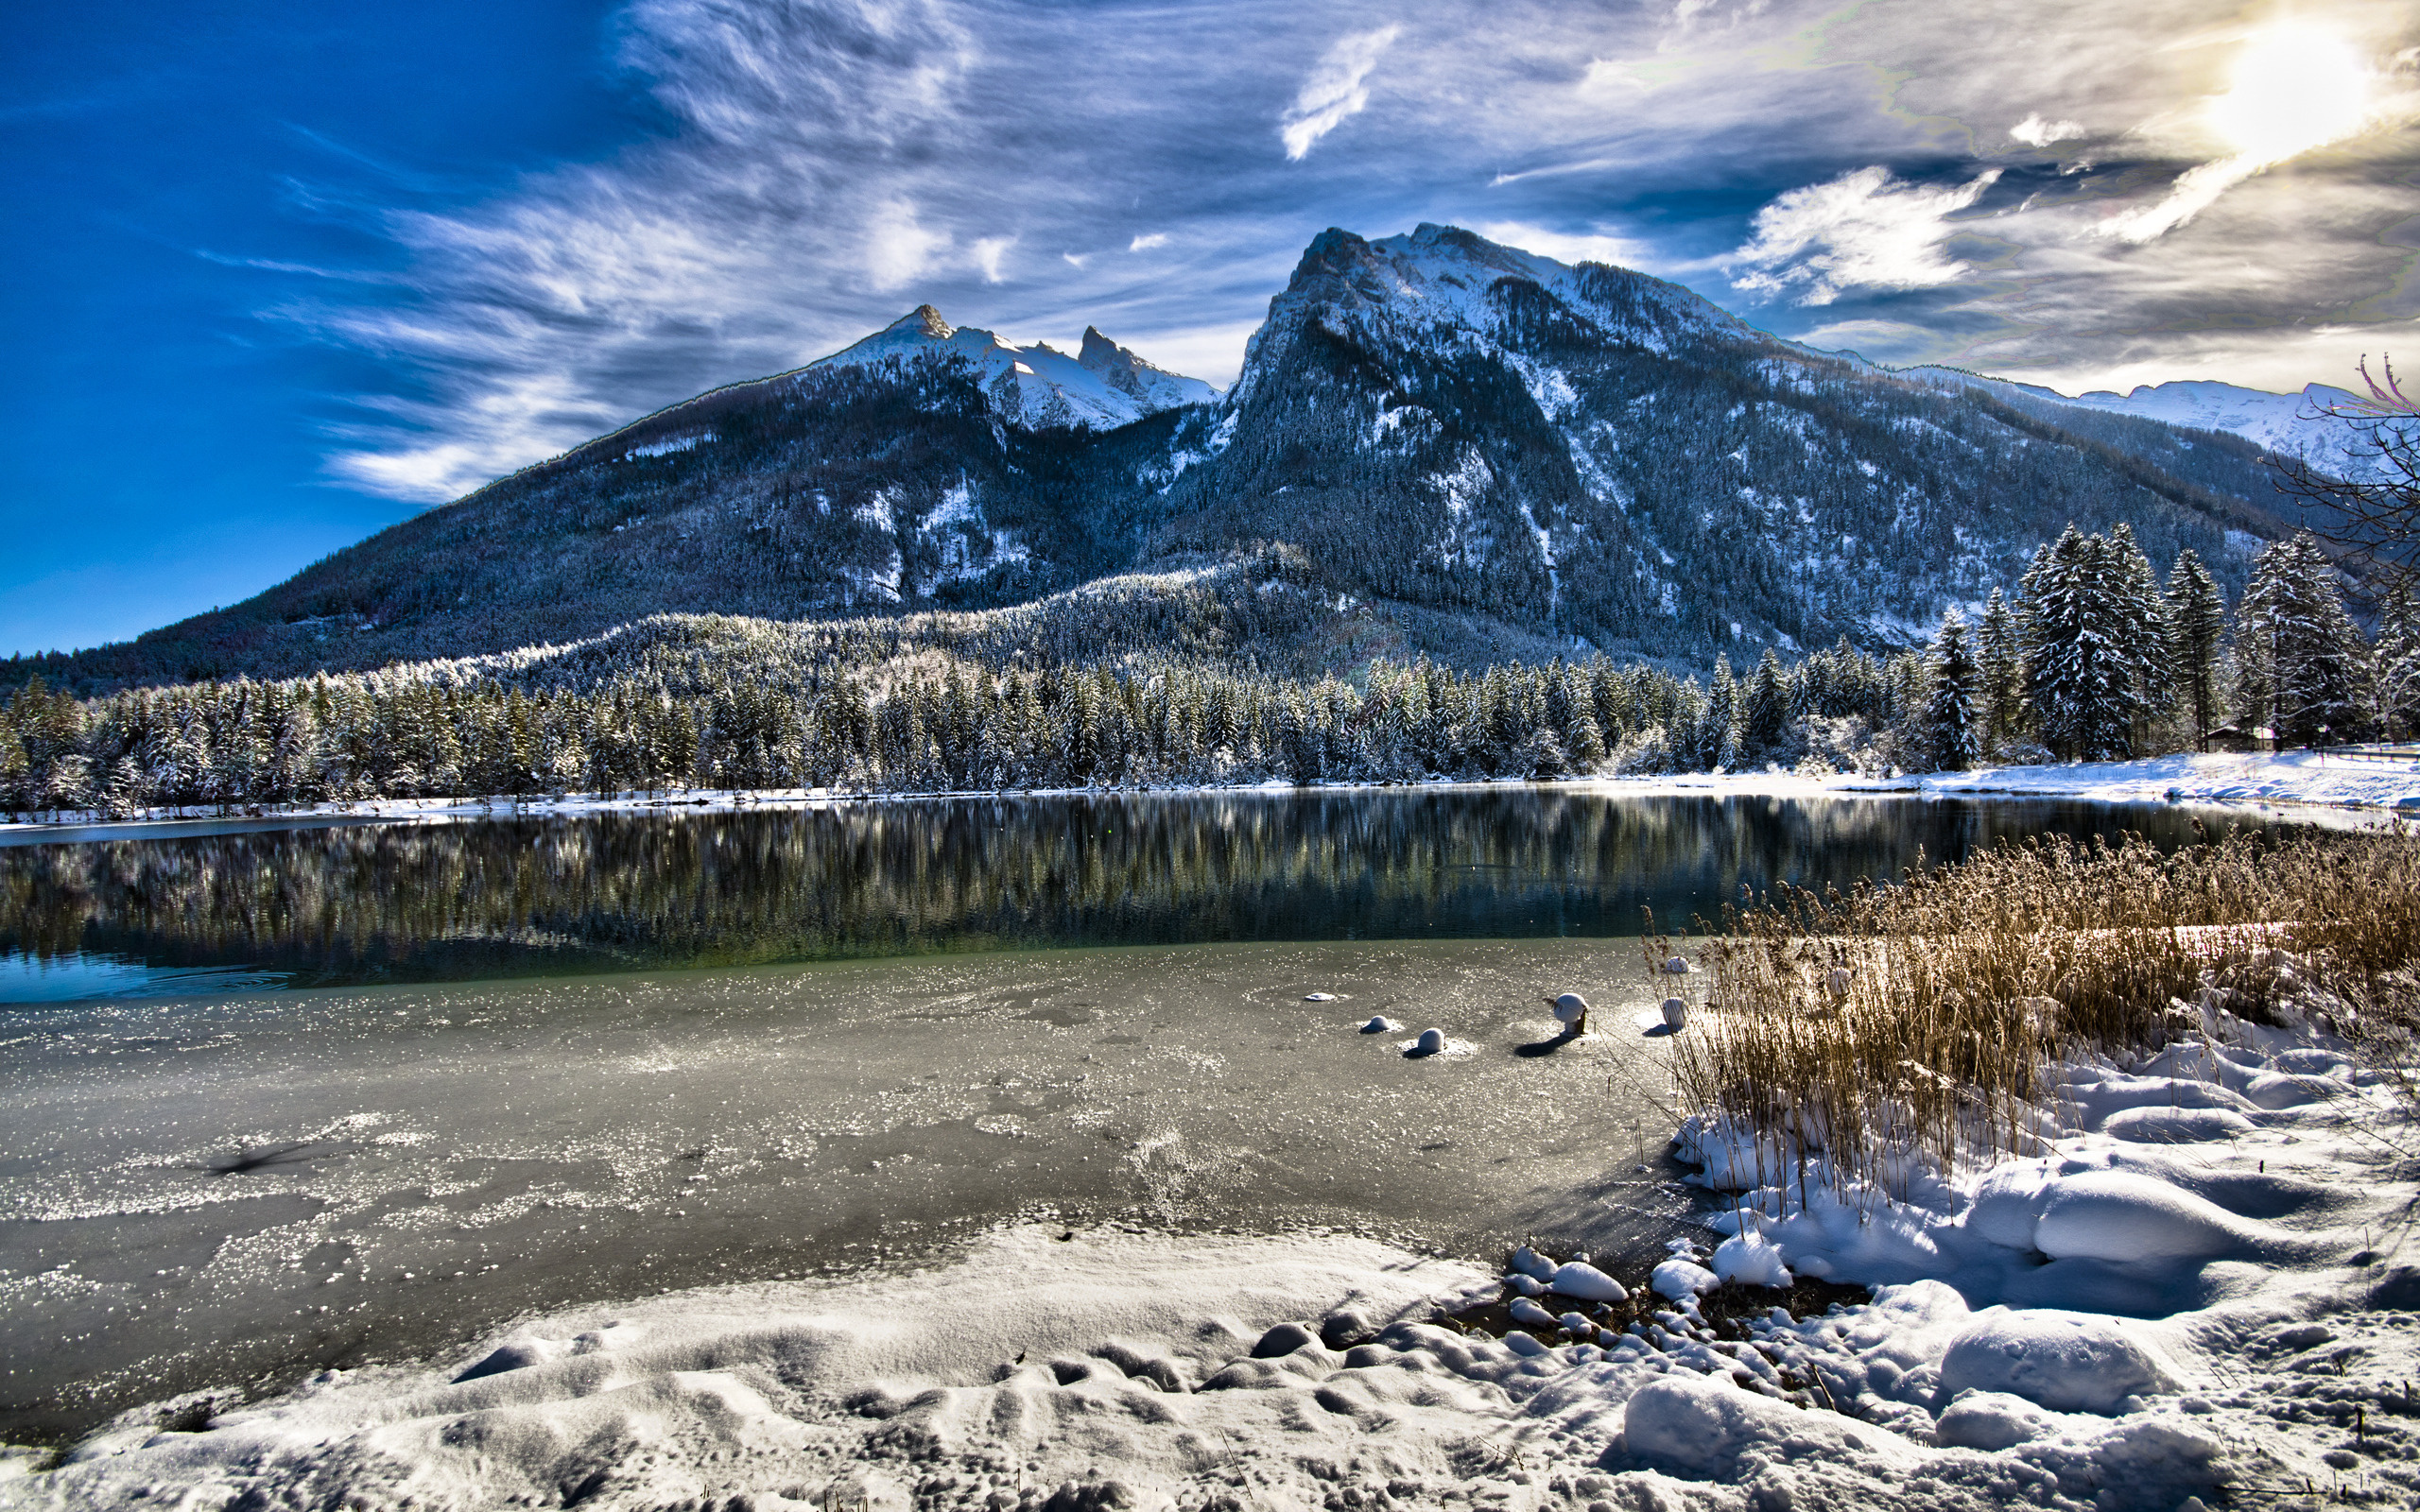 عکس زمینه فصل زمستان در میان کوه ها و دریاچه کنارش 